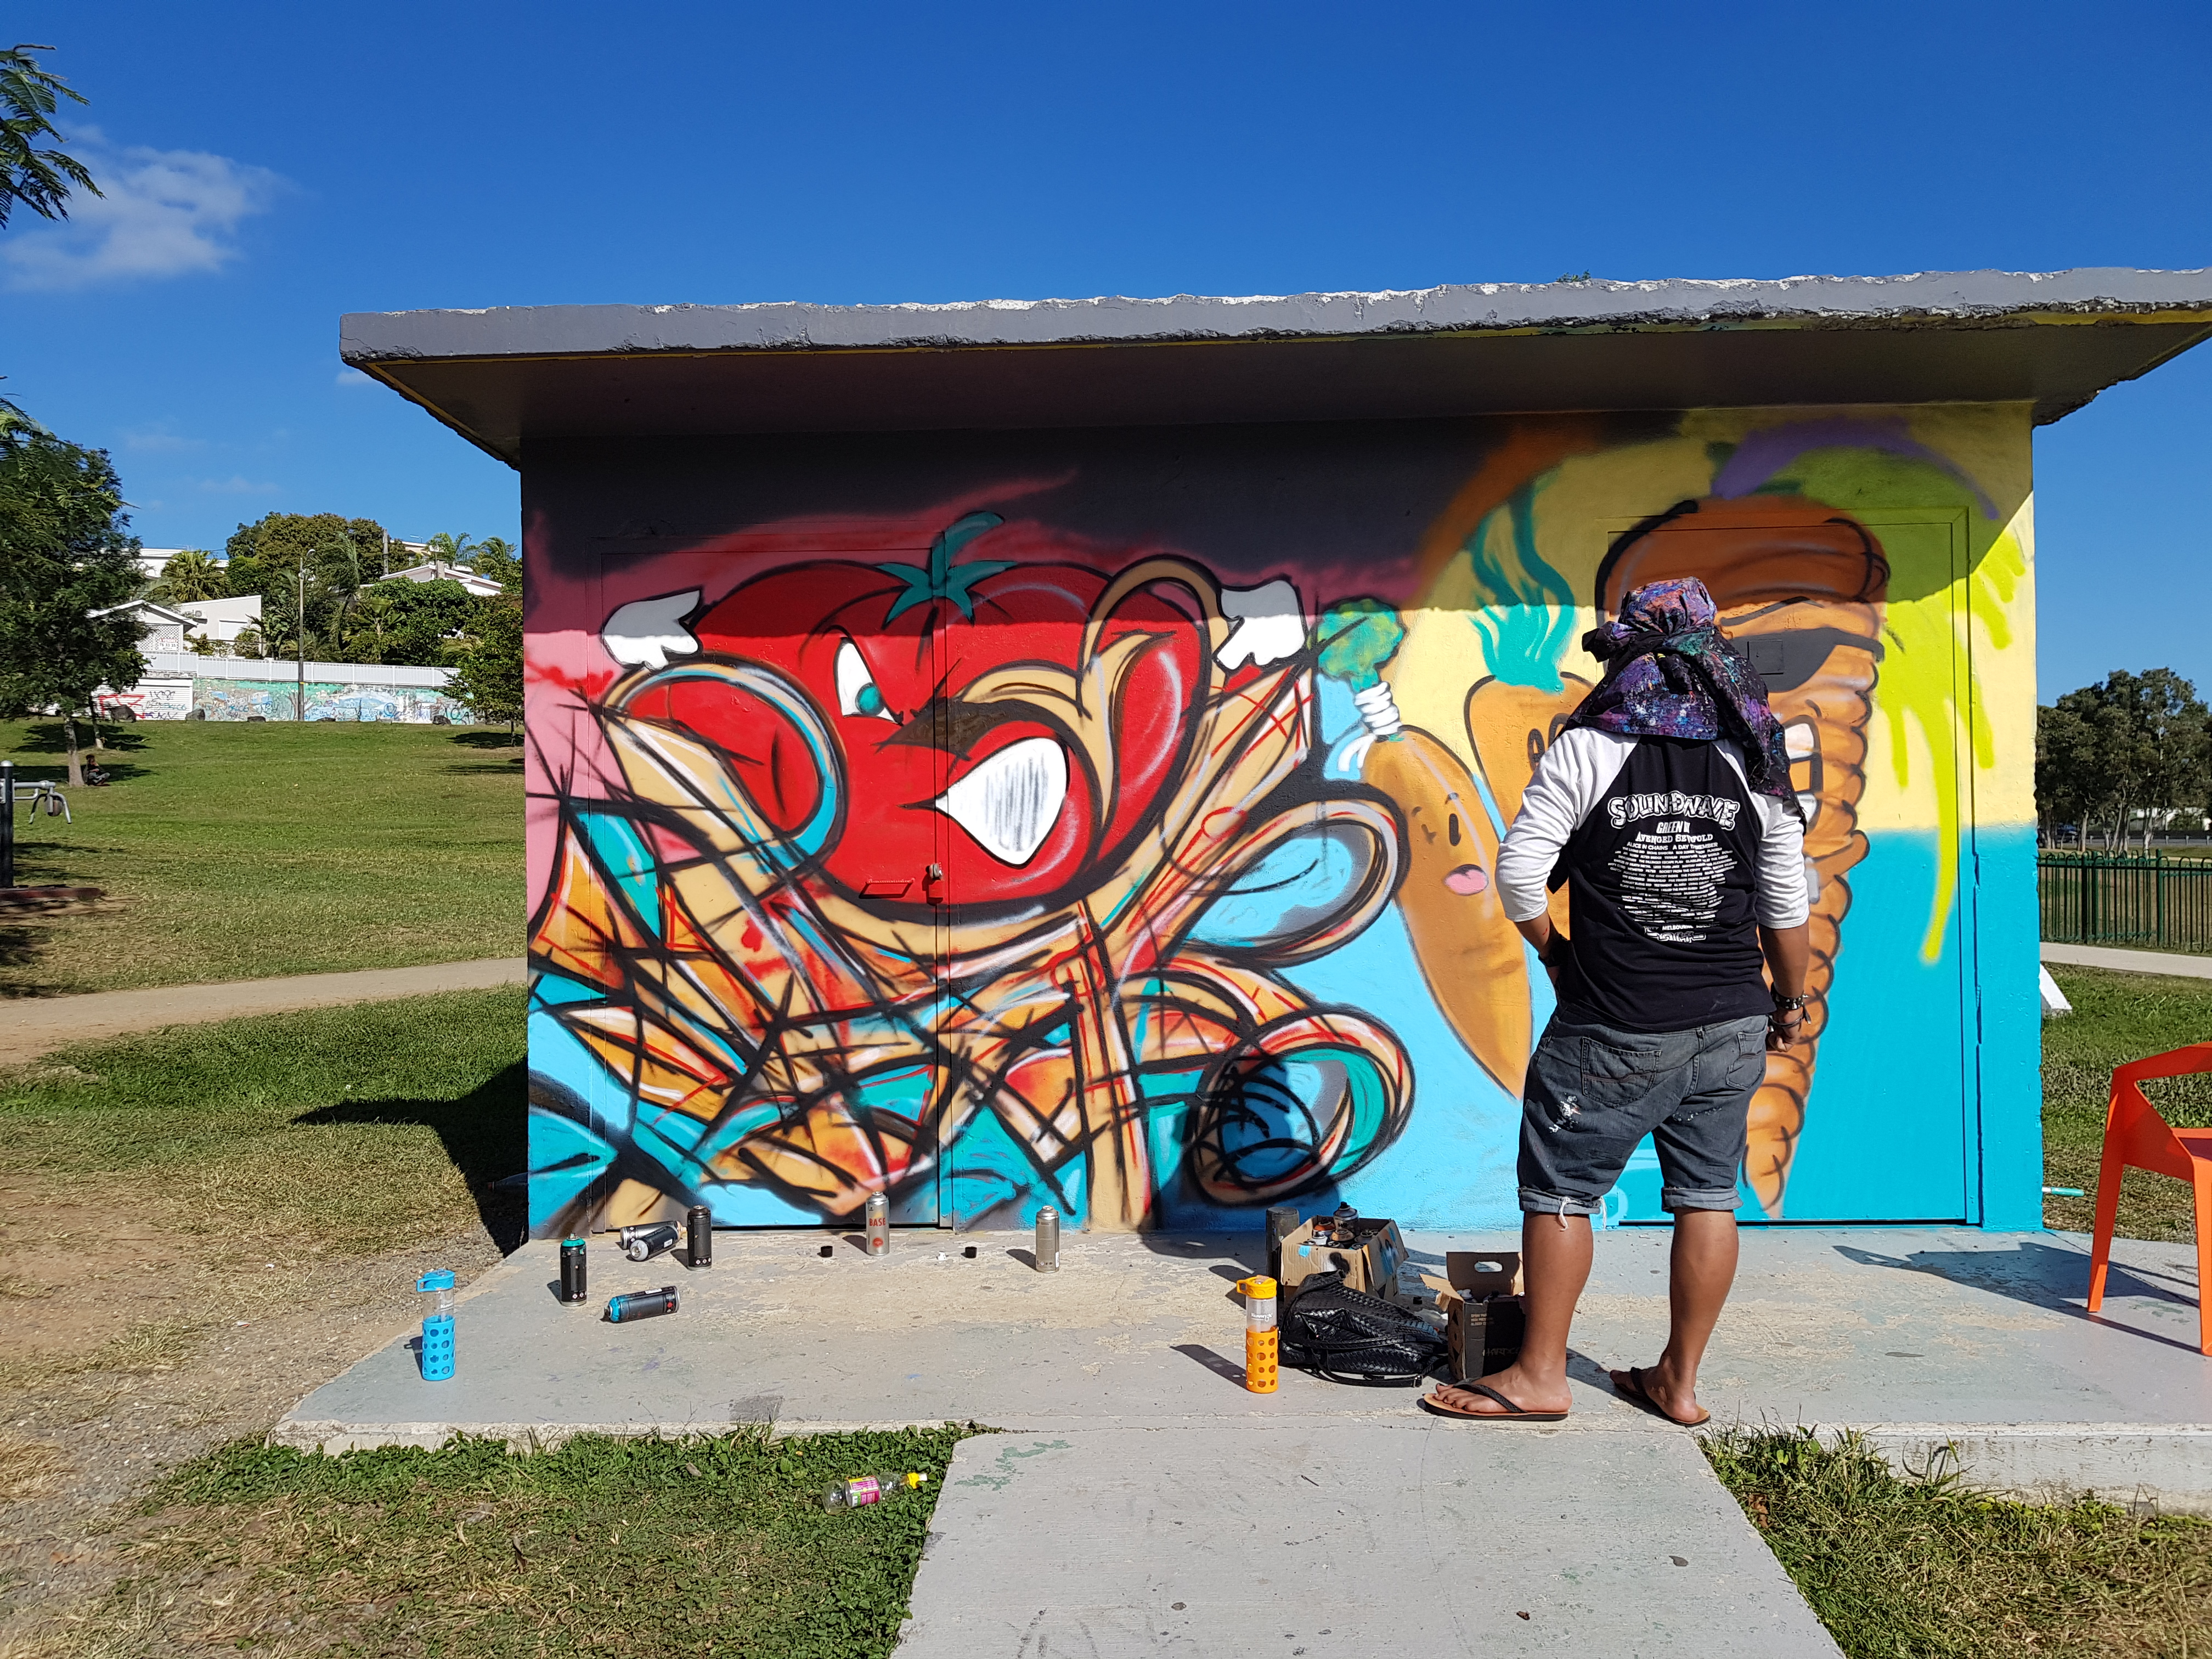 Graff battle at Dumbea skate park (thanks to Dumbea city) - team Tonga